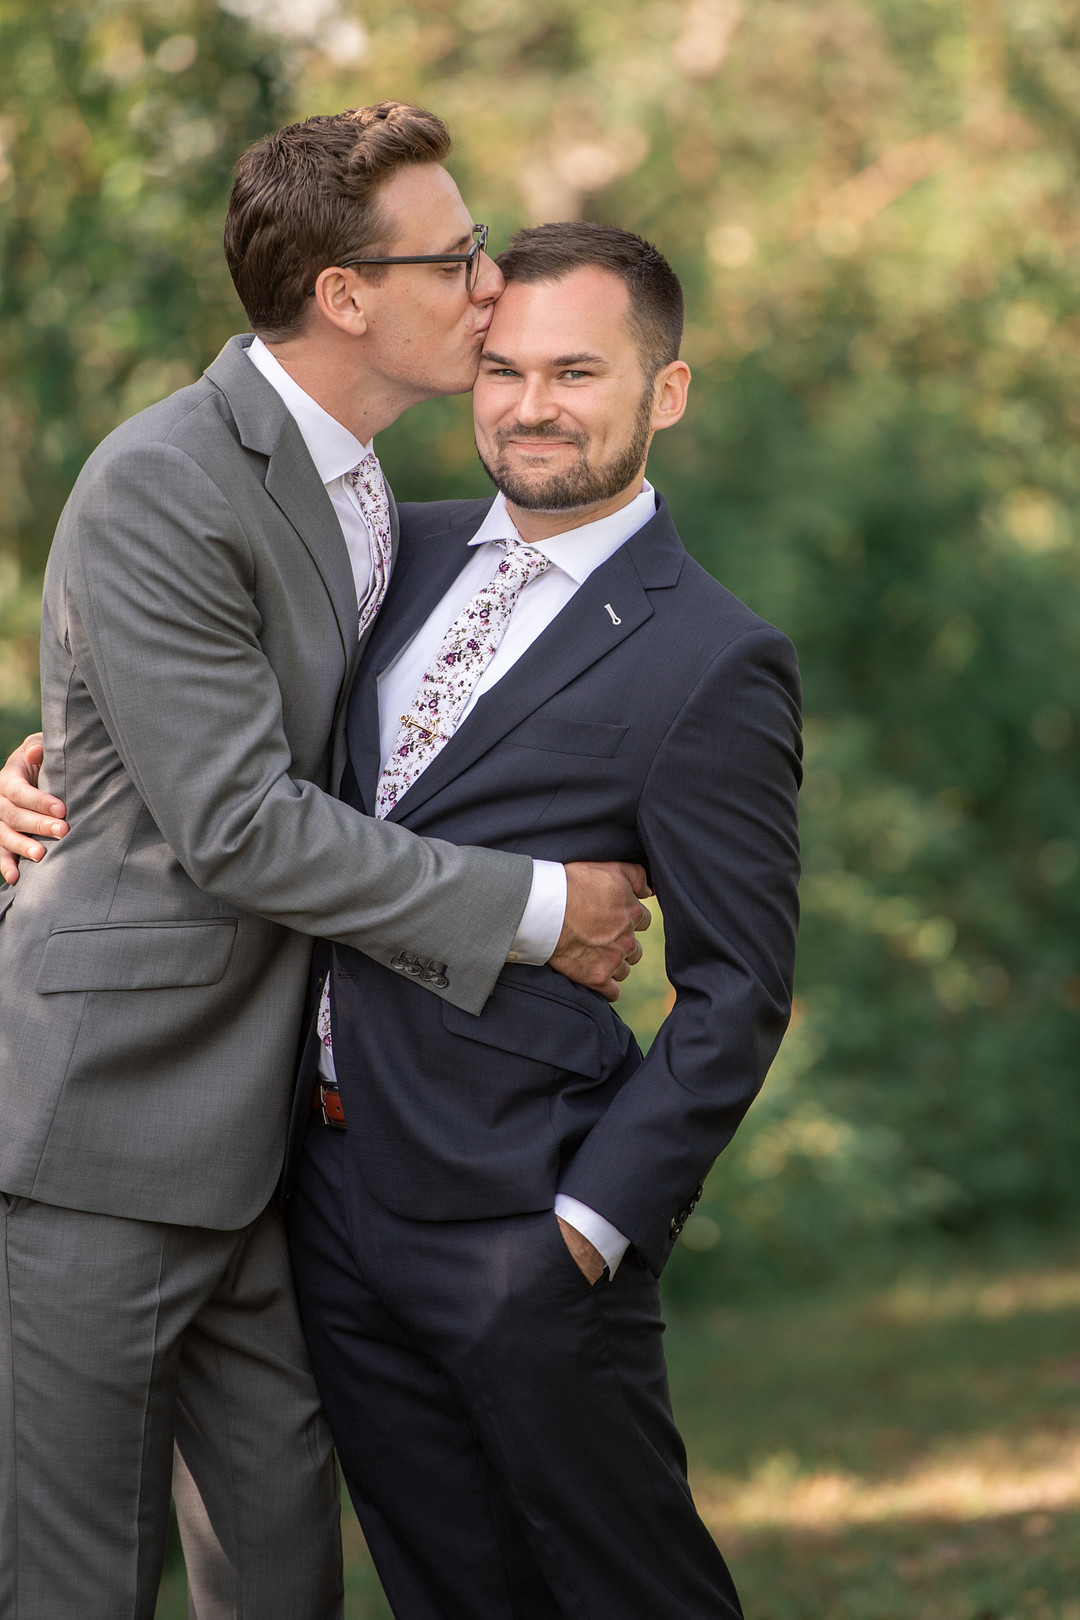 Ben and Joshua - LGBT Weddings | Gay WeddingsLGBT Weddings | Gay Weddings